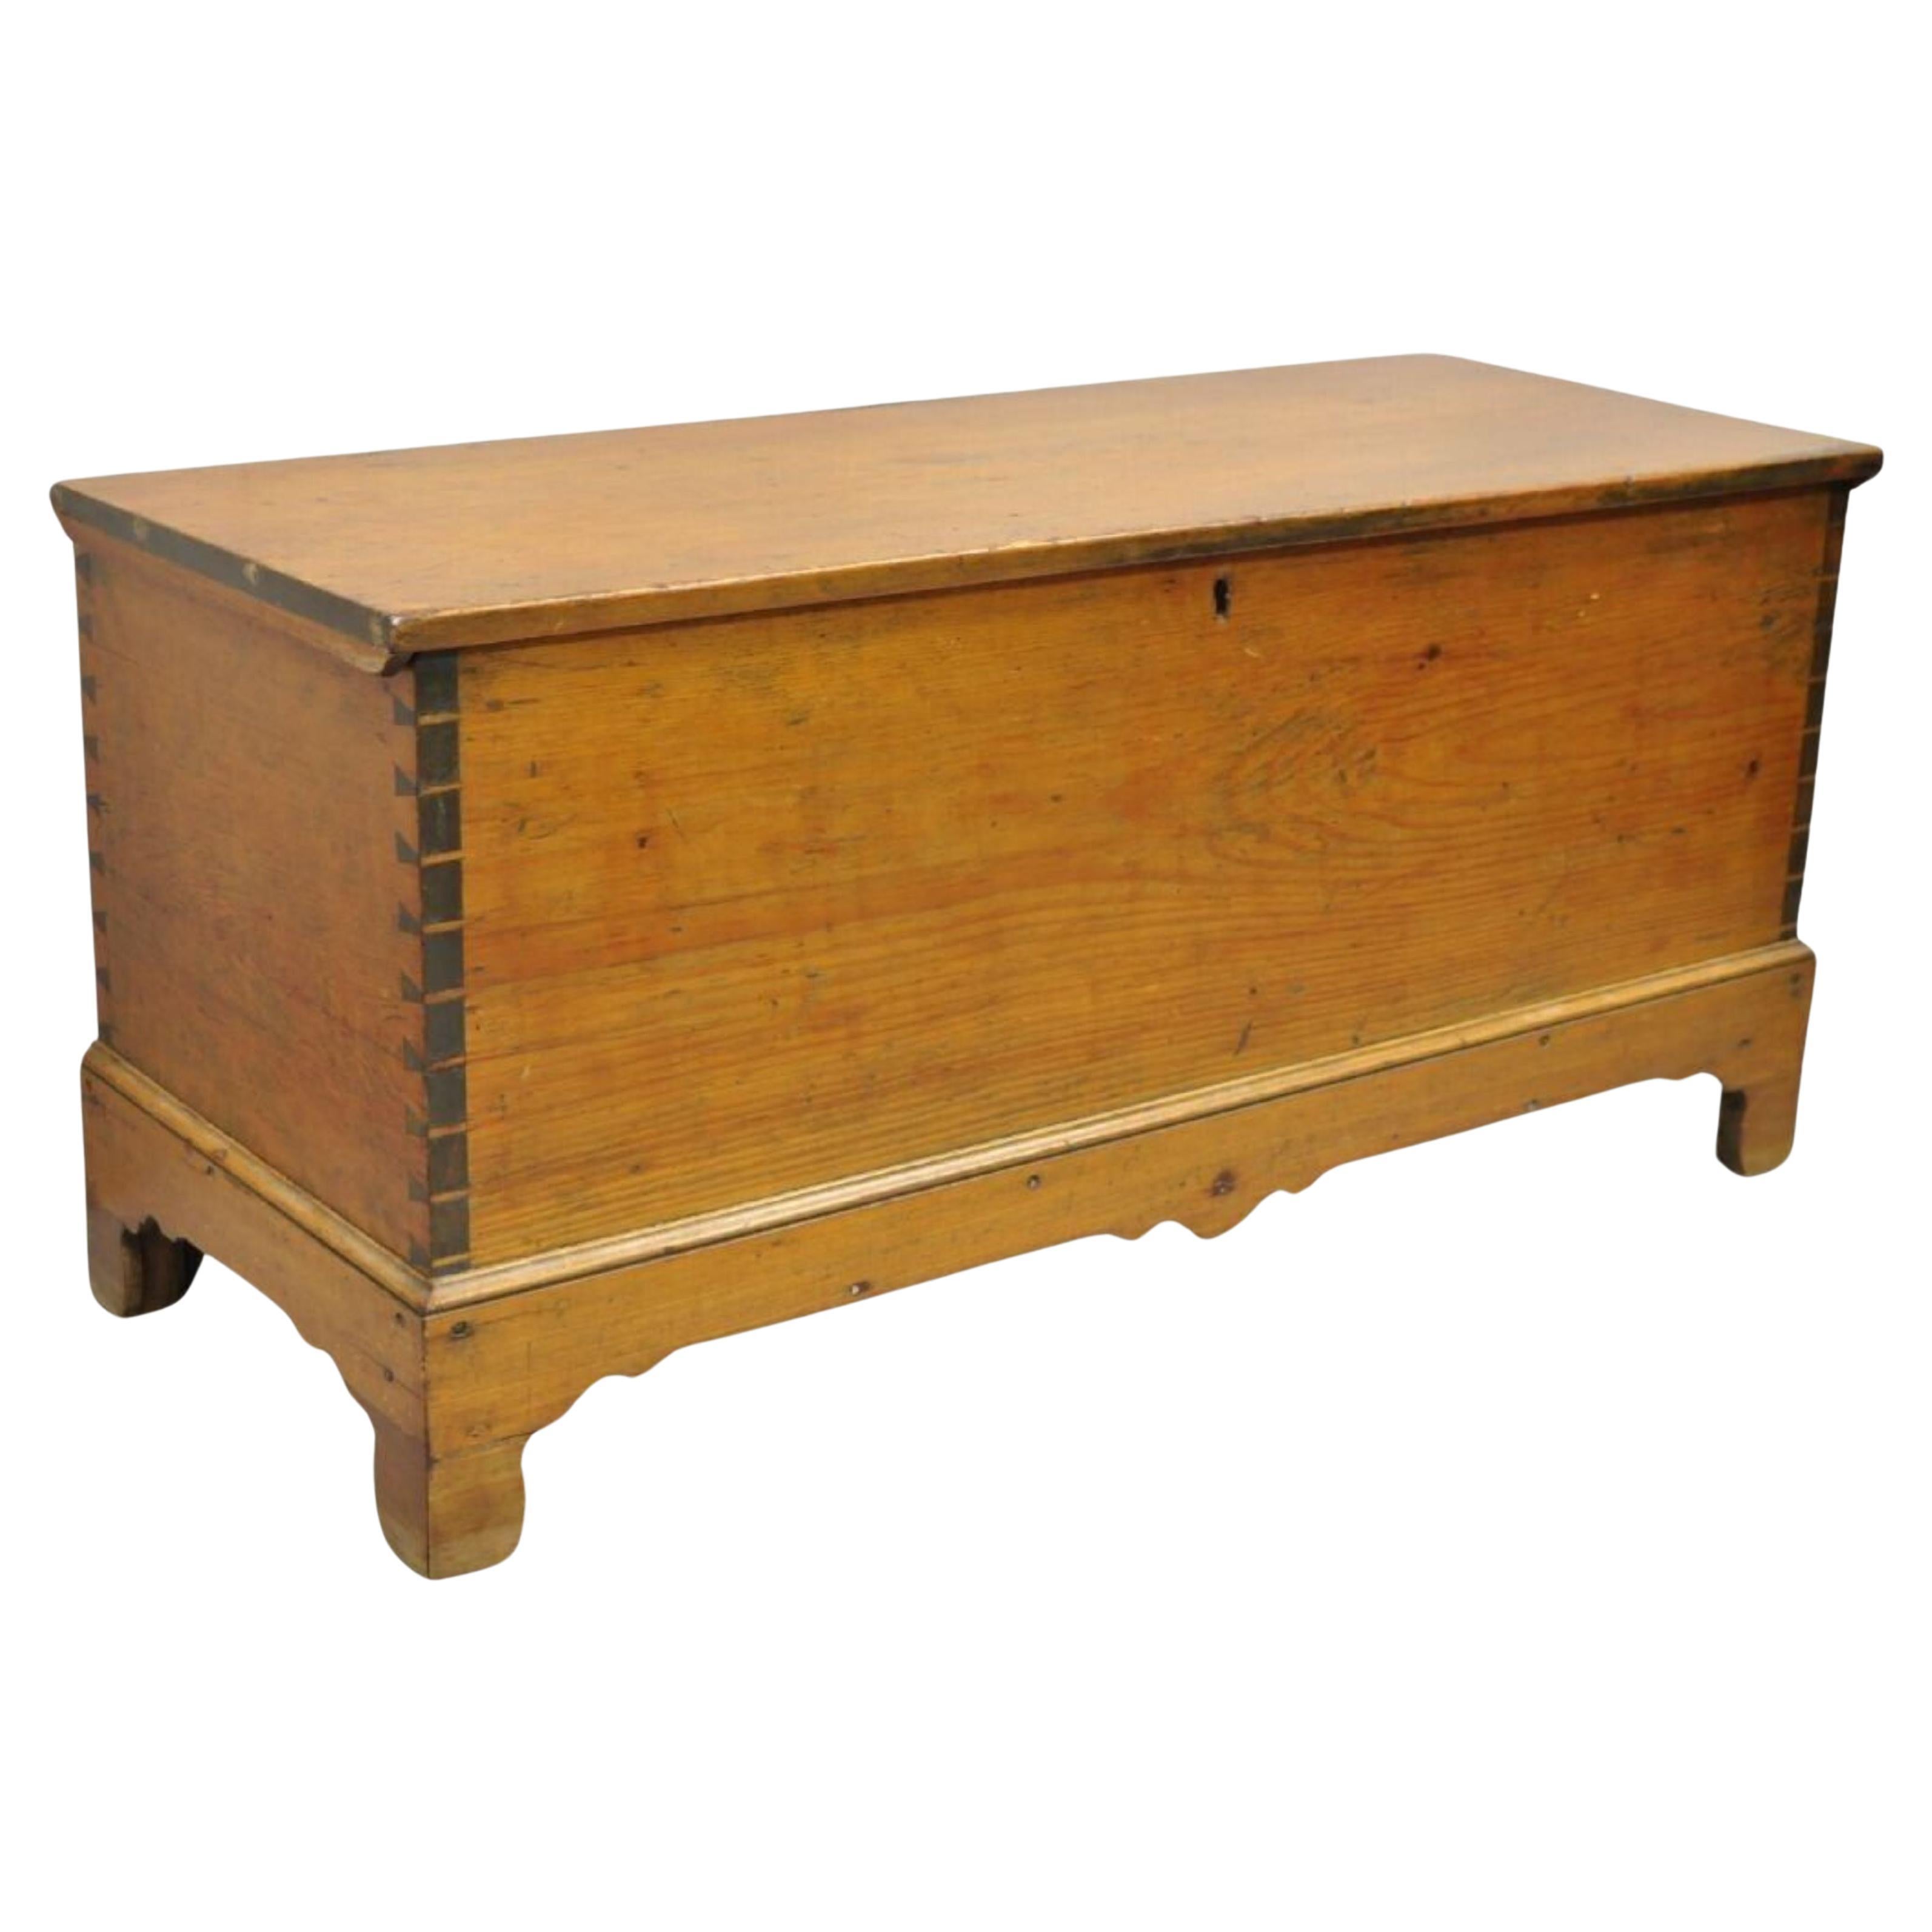 Antique 19th C Chestnut Dovetailed Primitive Wooden Storage Blanket Chest Trunk For Sale